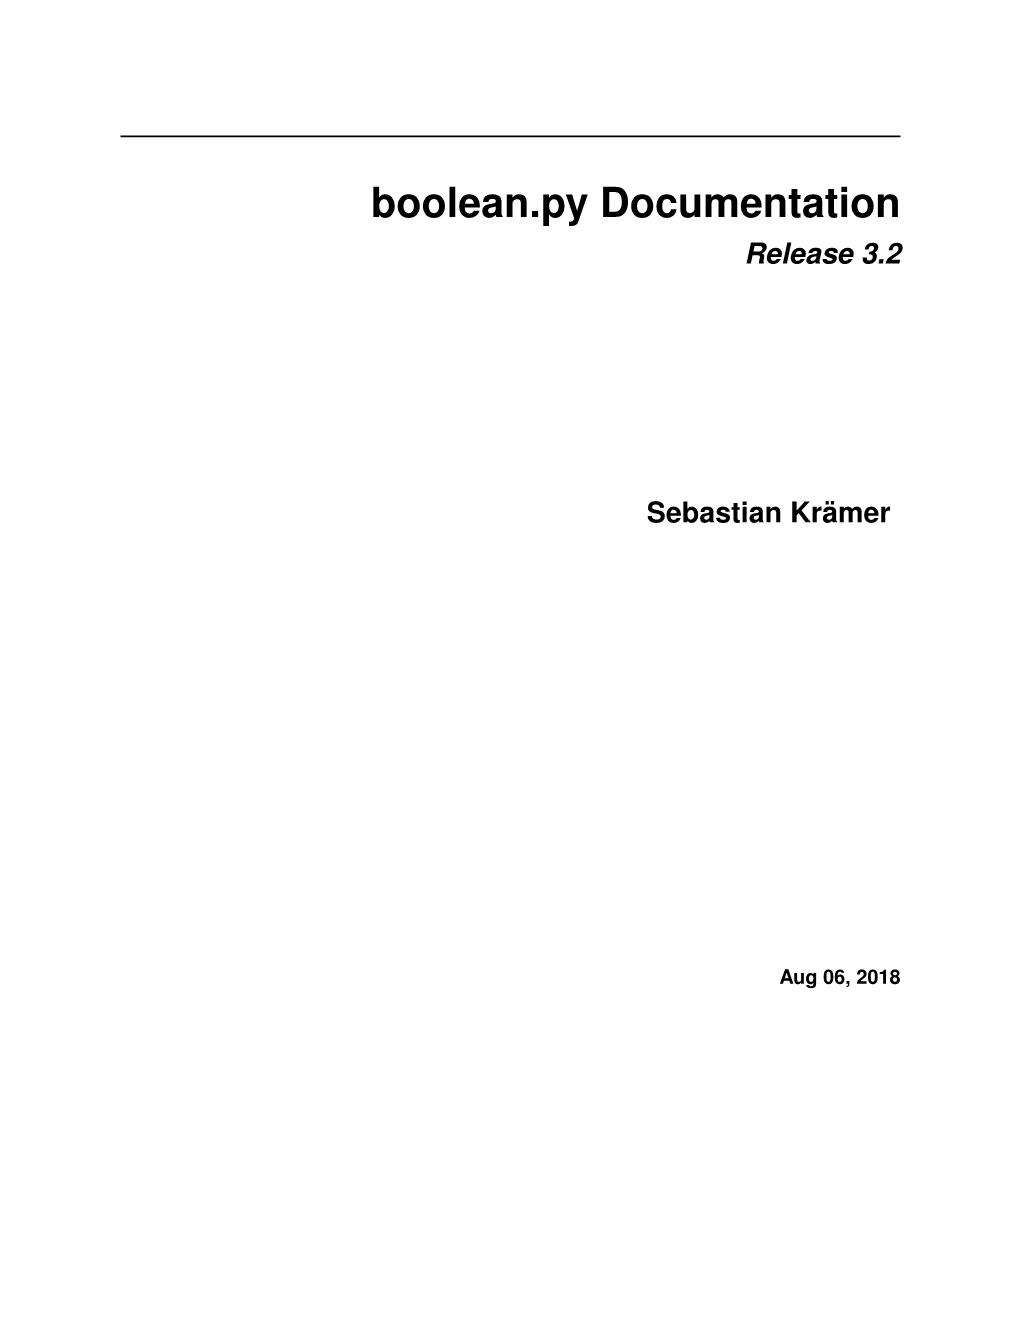 Boolean.Py Documentation Release 3.2